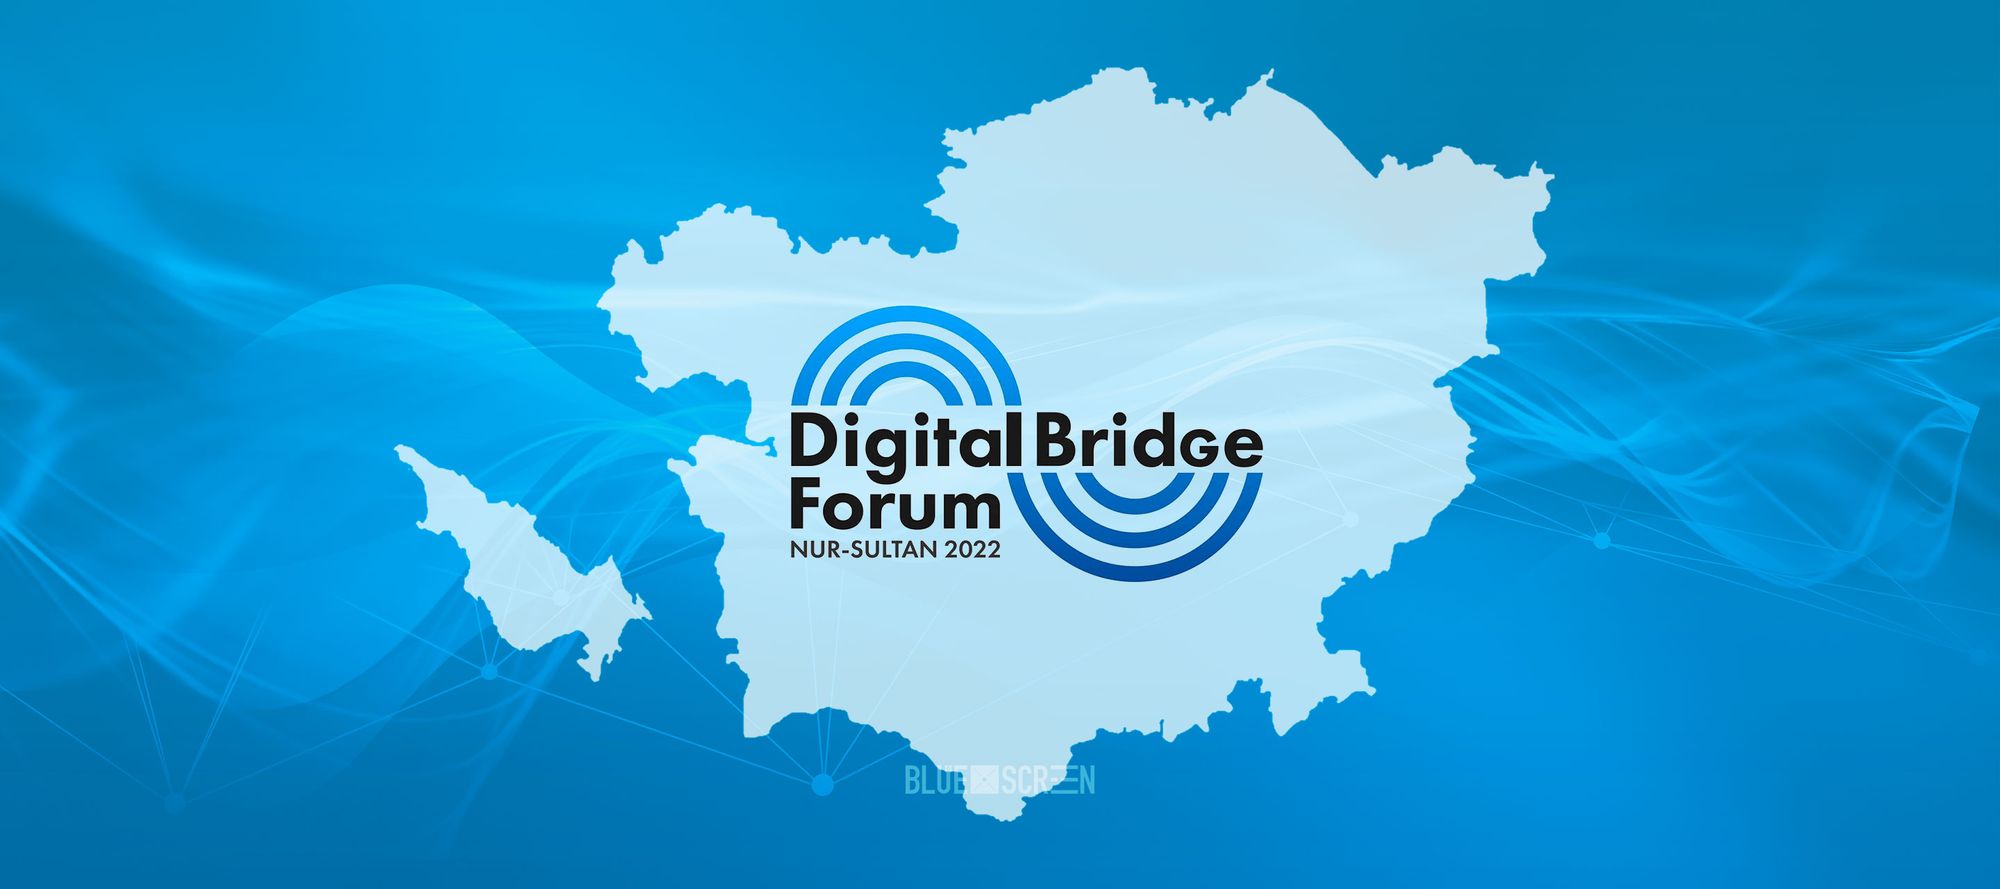 13 технопарков представят на выставке в рамках Digital Bridge-2022